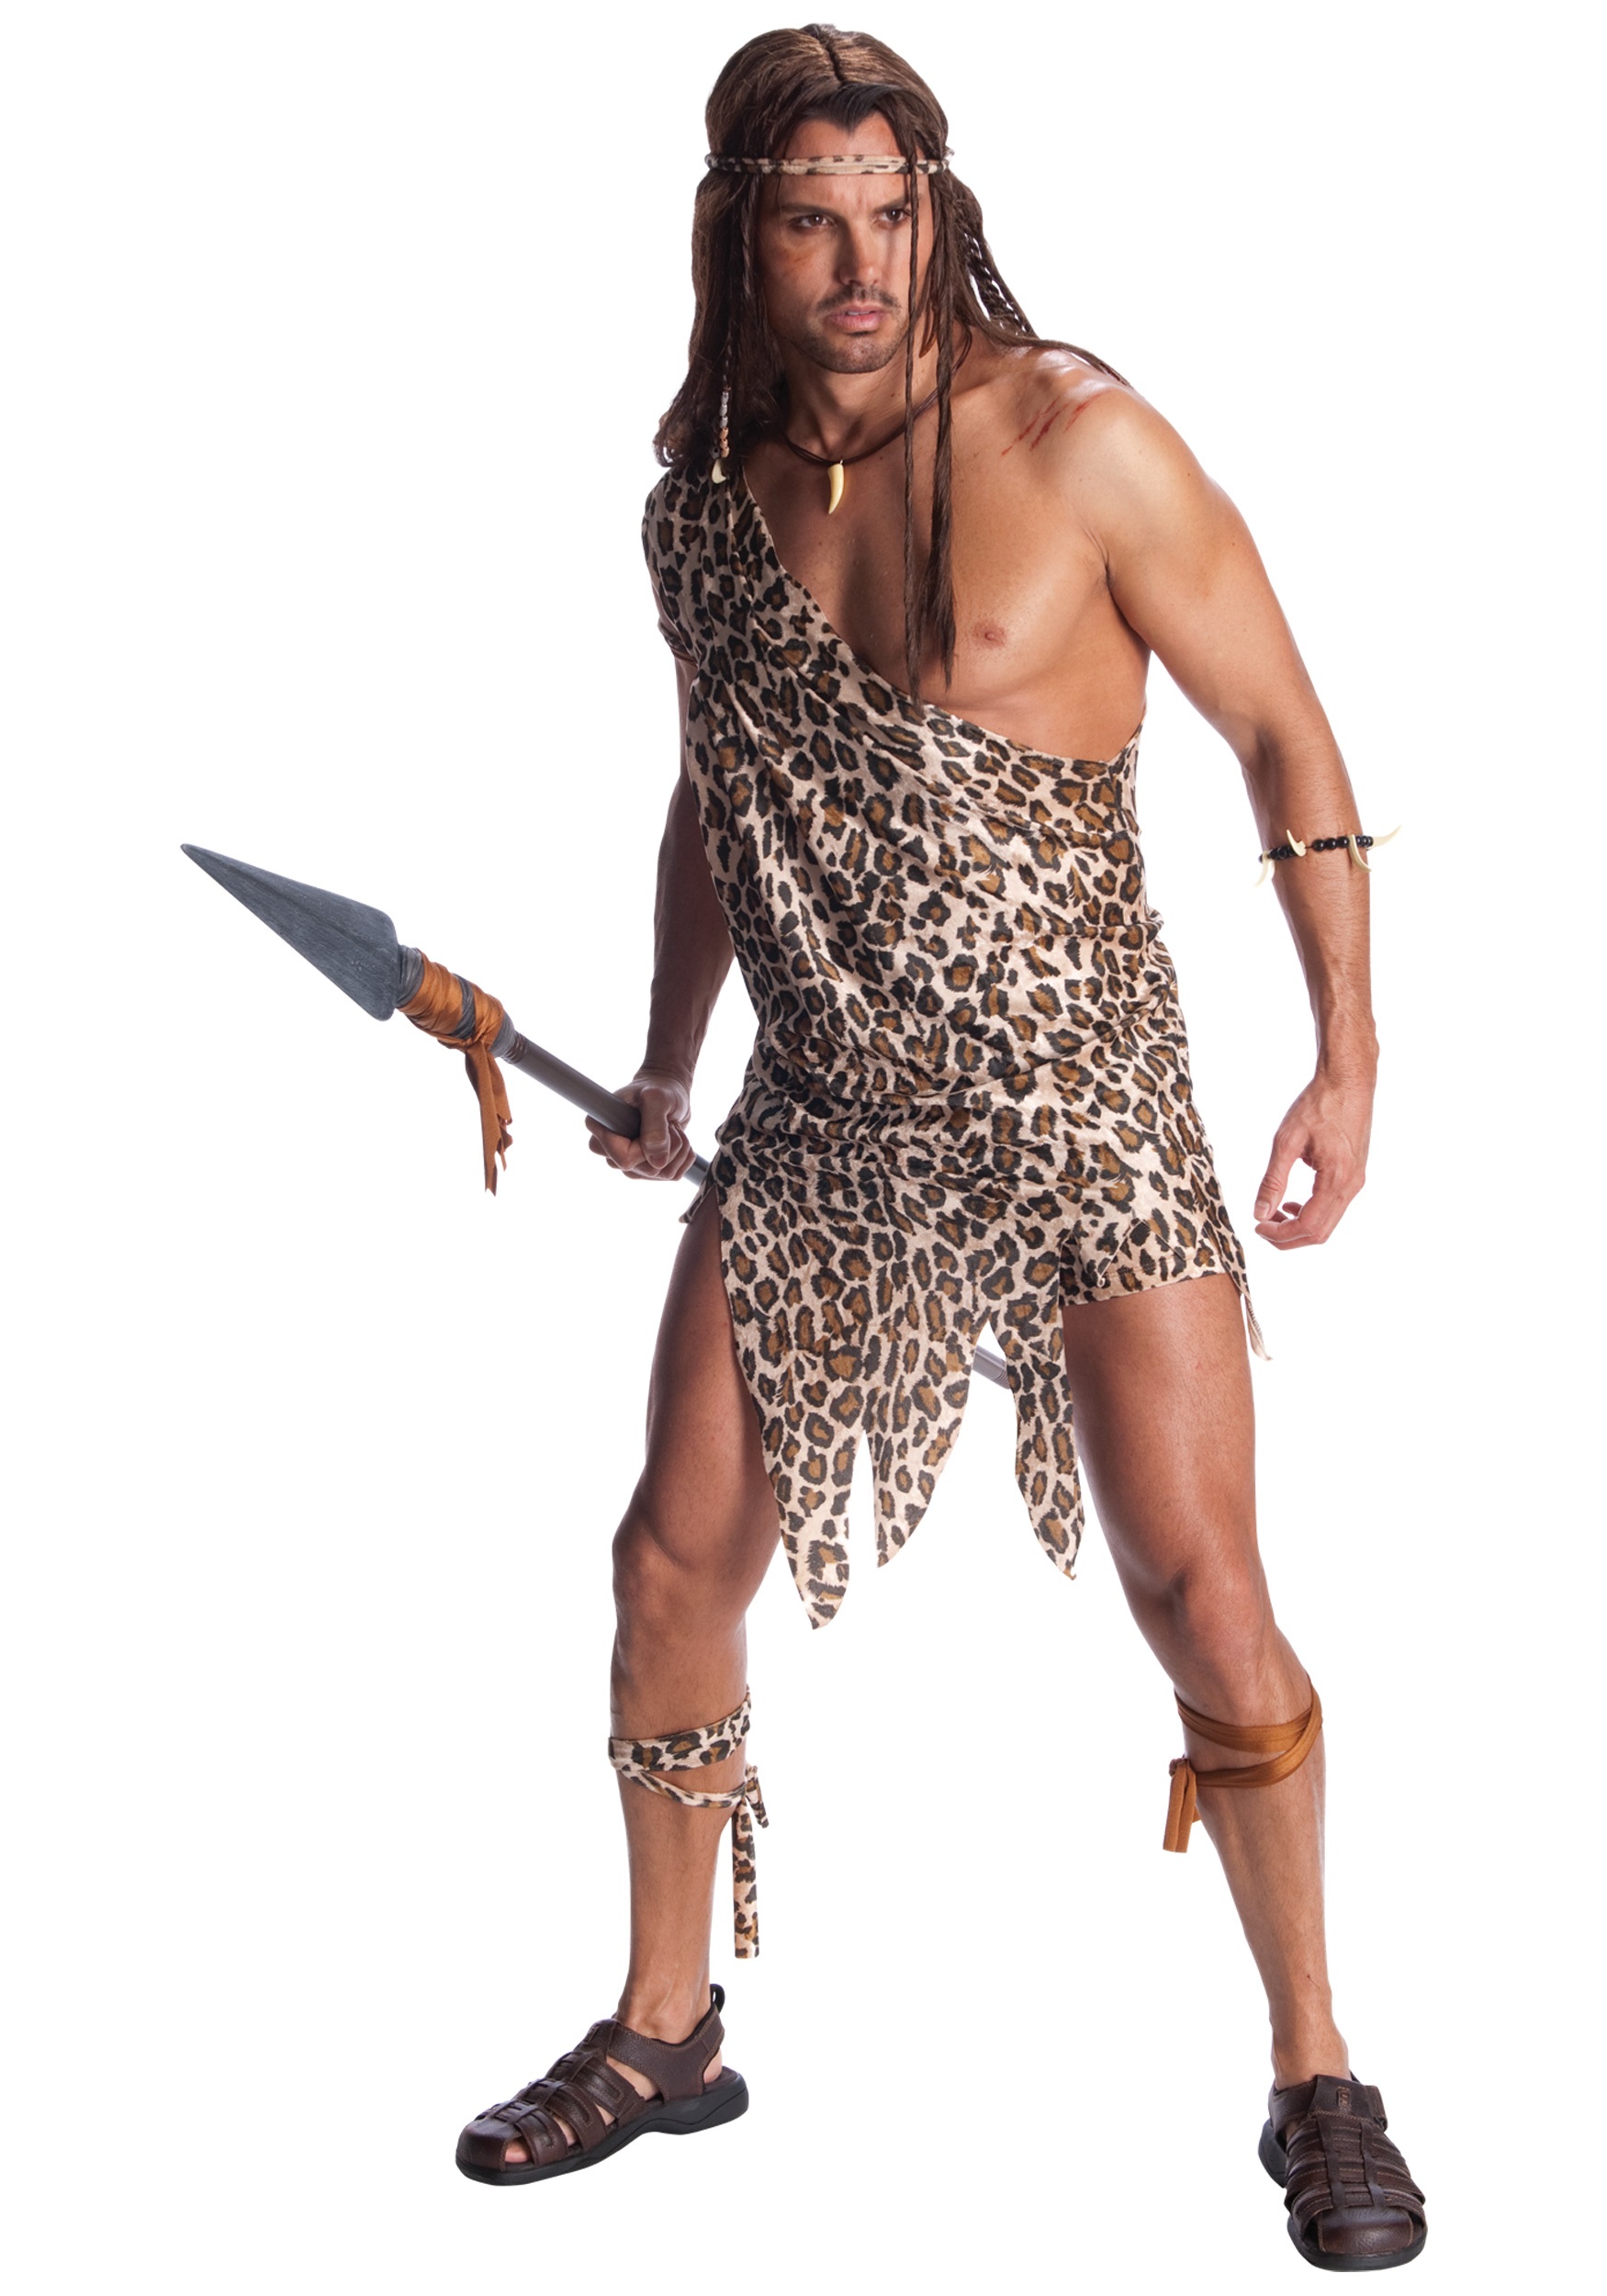 Tarzan costumes for adults